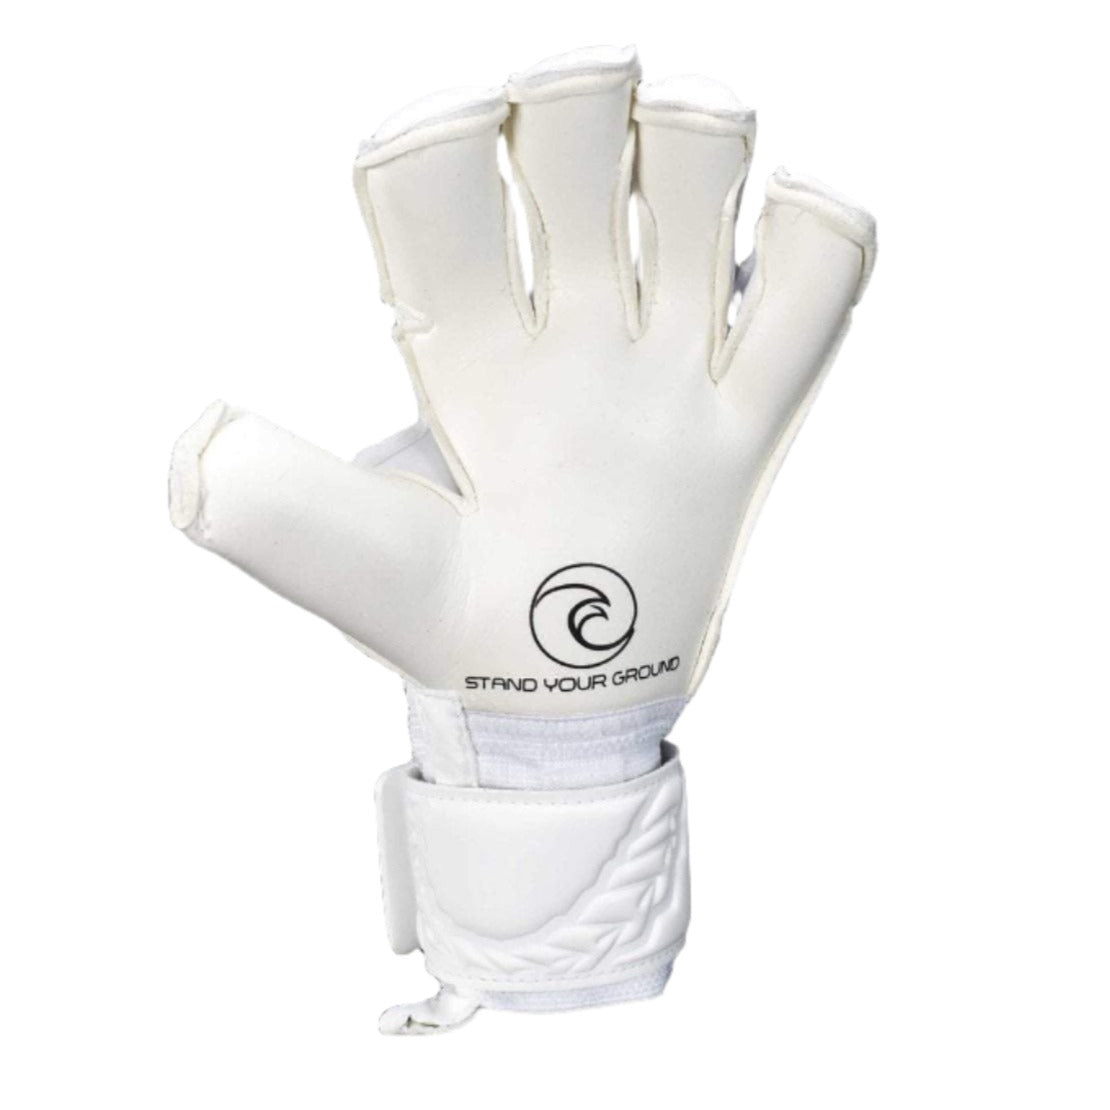 West Coast Kona Pura Gk Gloves - White